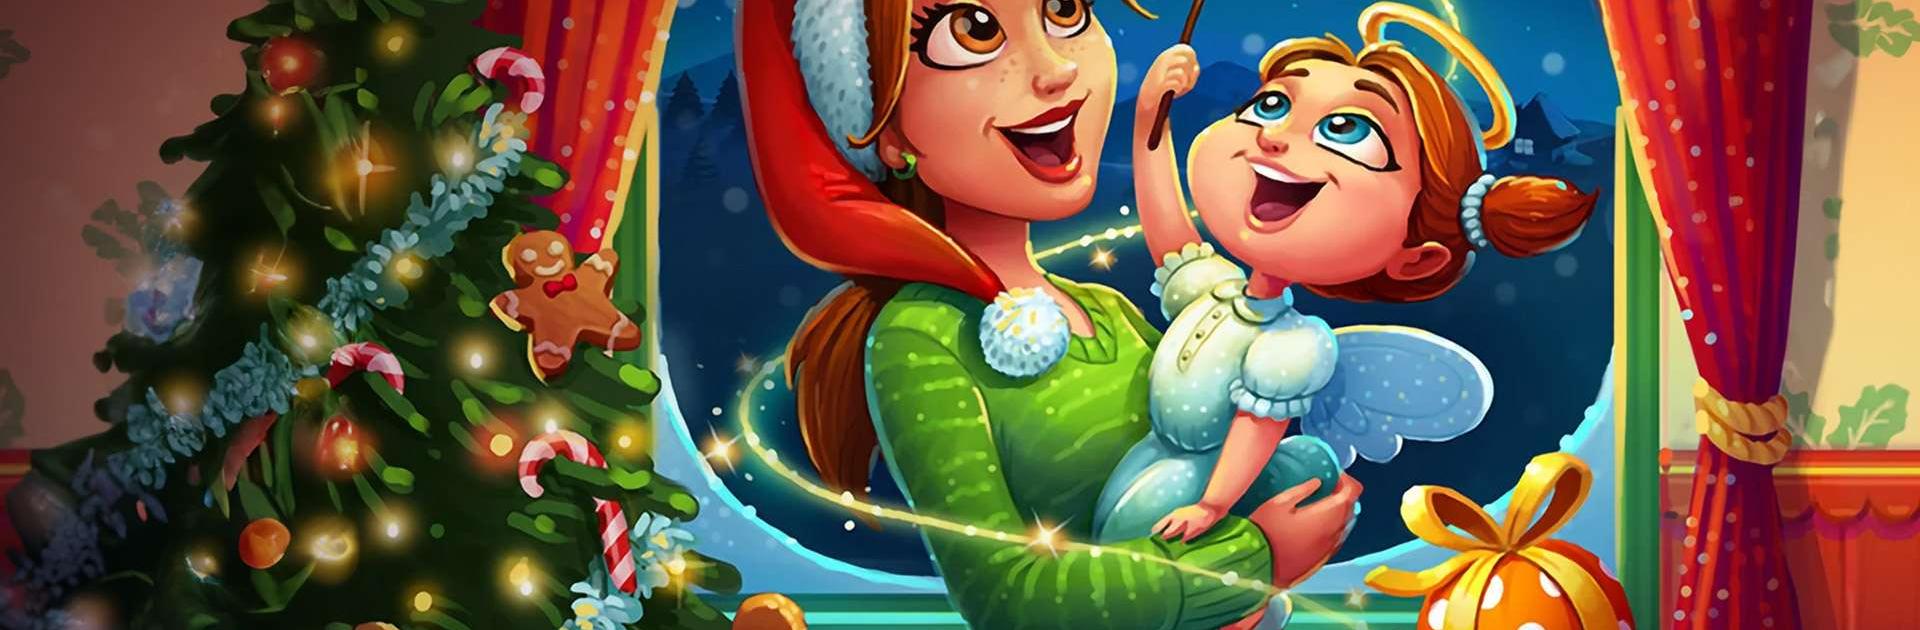 Play Delicious - Christmas Carol Online